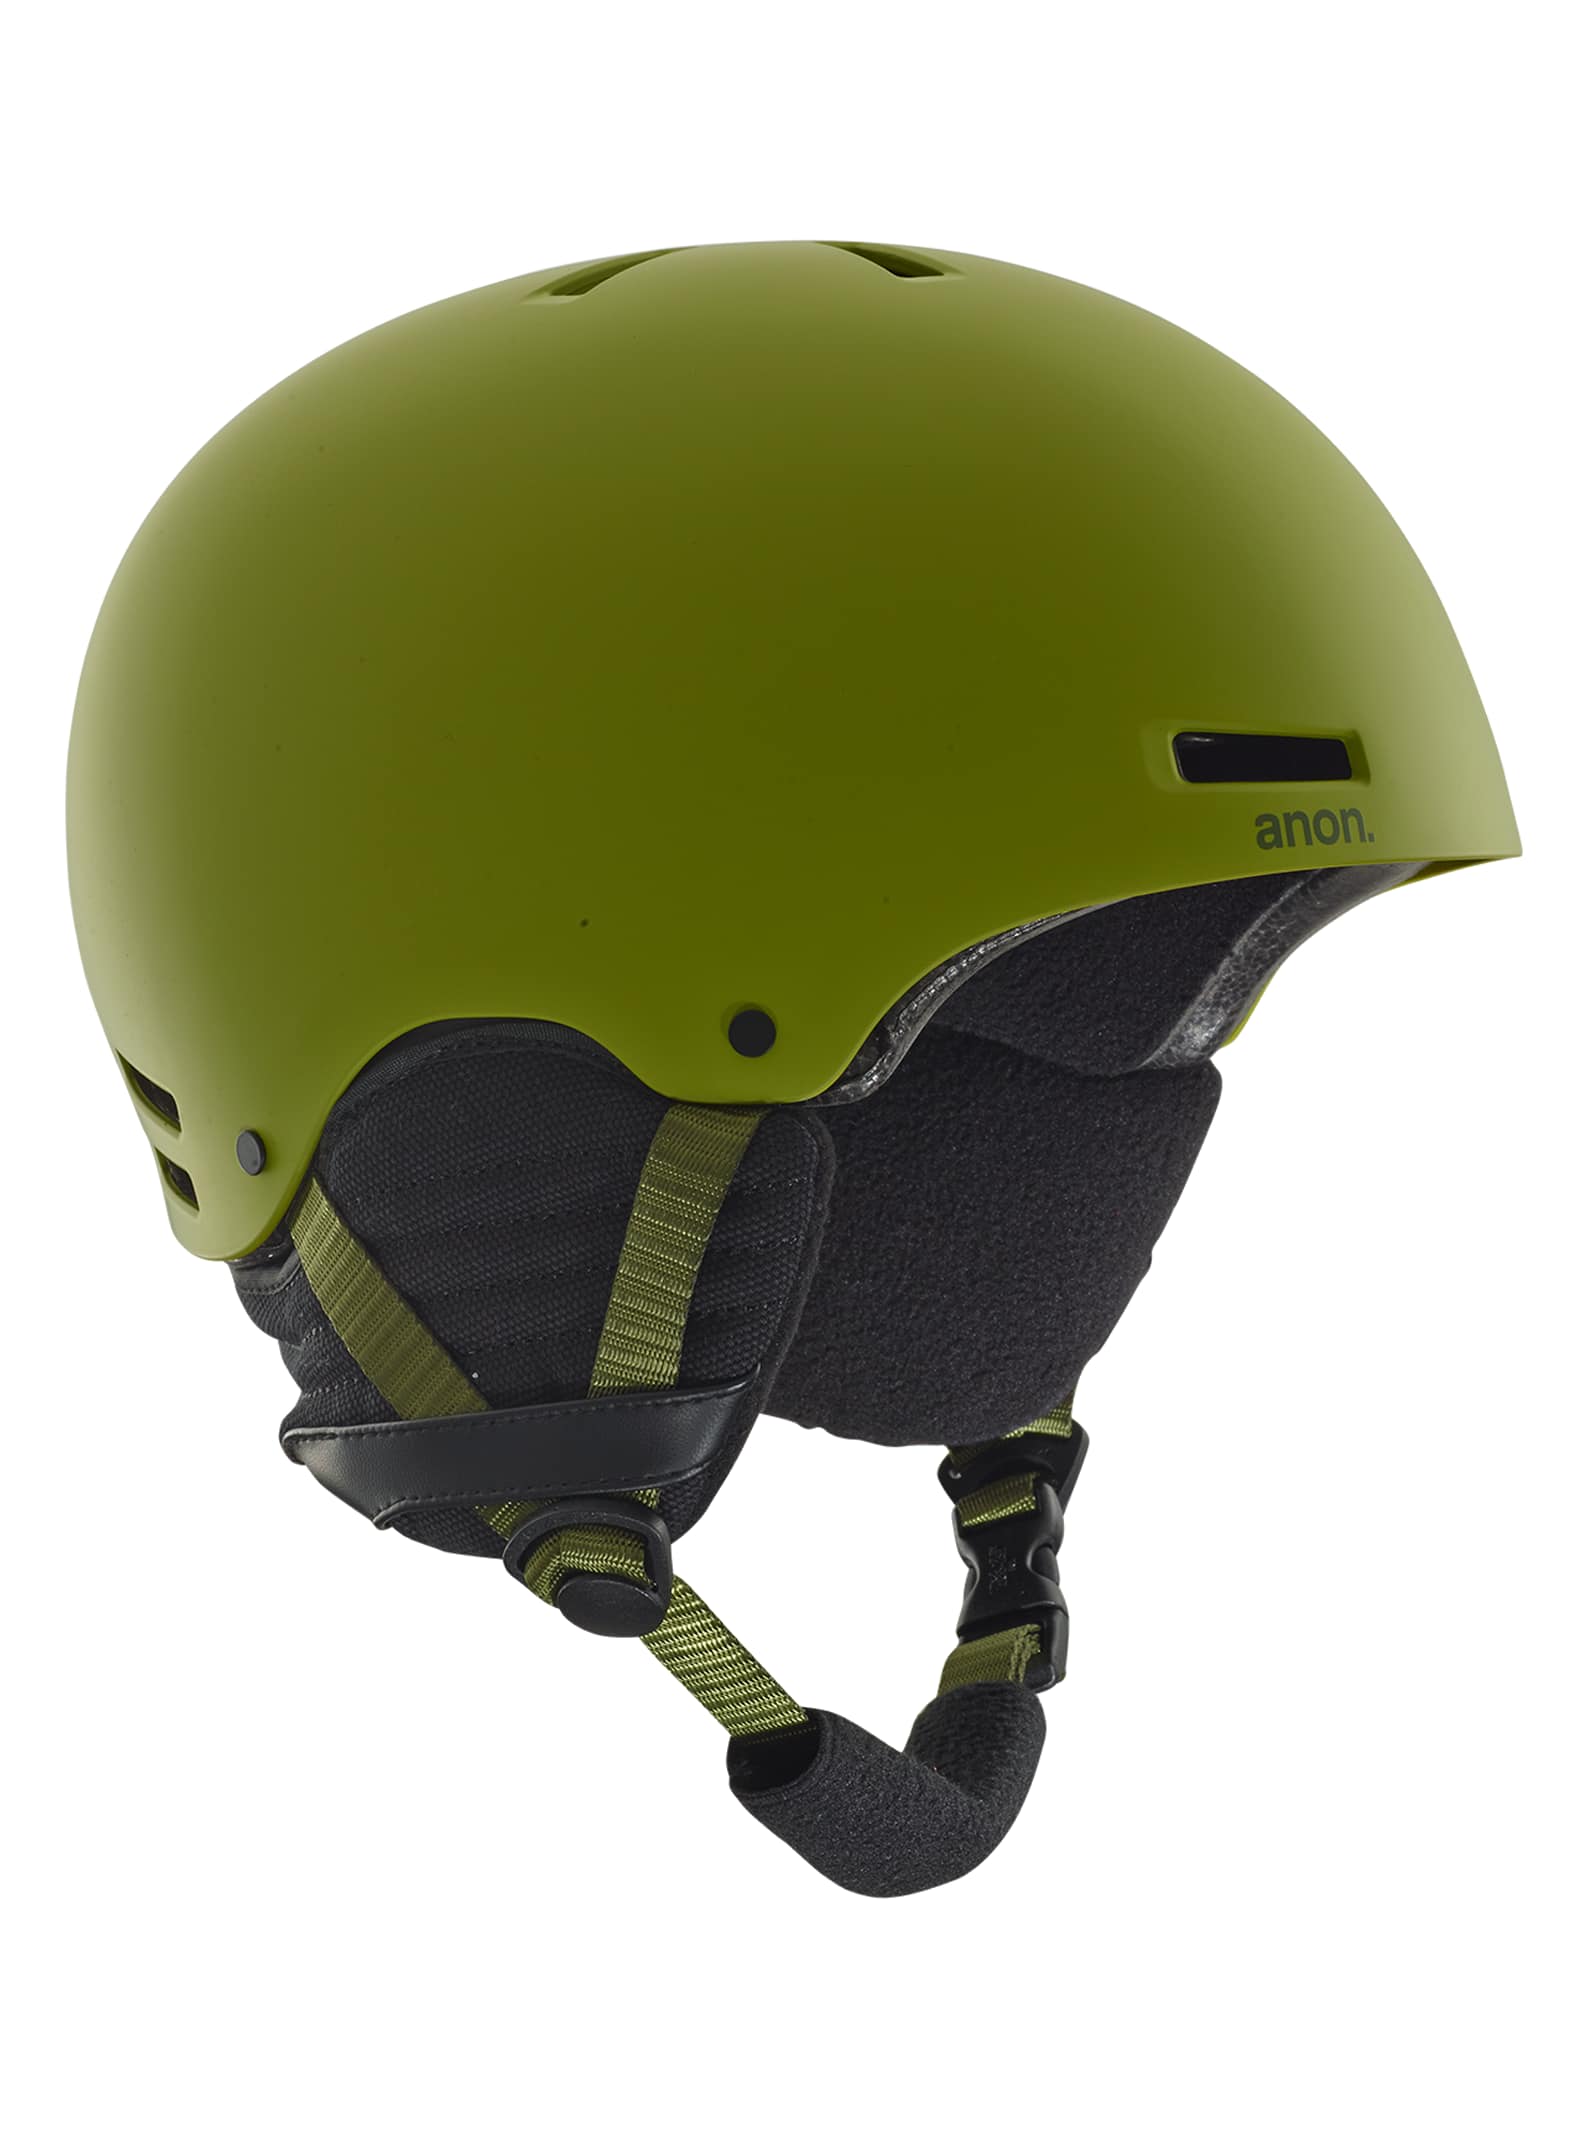 Raider Youth Helmet Sizing Chart